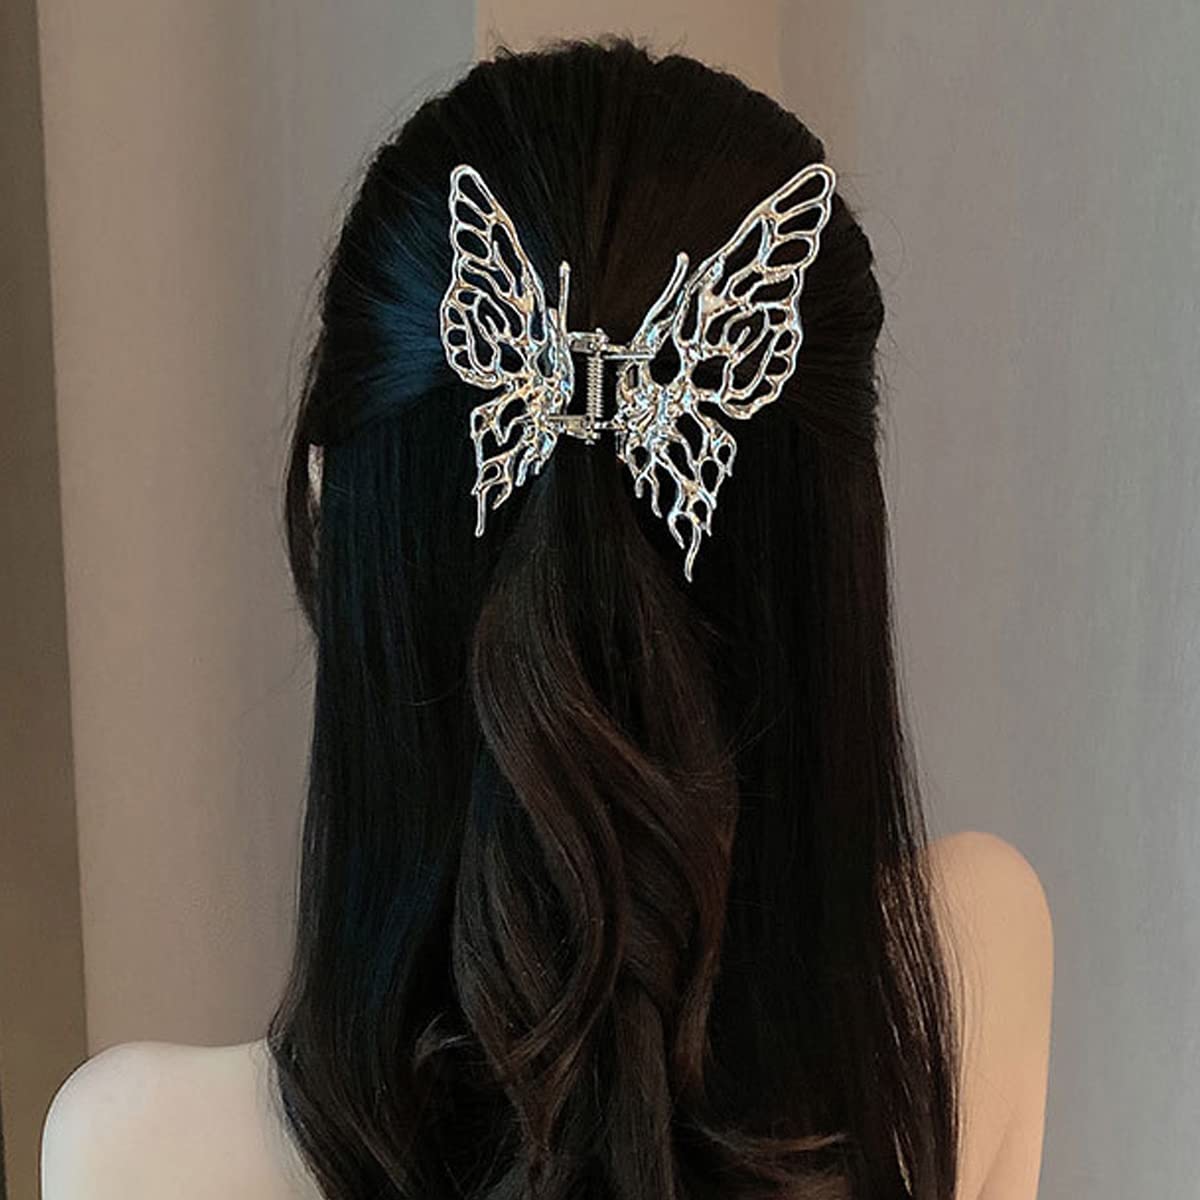 Butterfly Hair Claw Clips Big Hair Clips Silver Metal Hair Pins Jaw Clips Elegant Fairy-like Cute Hair Accessories Hair Barrettes for Women Girls of Thick Thin Hair